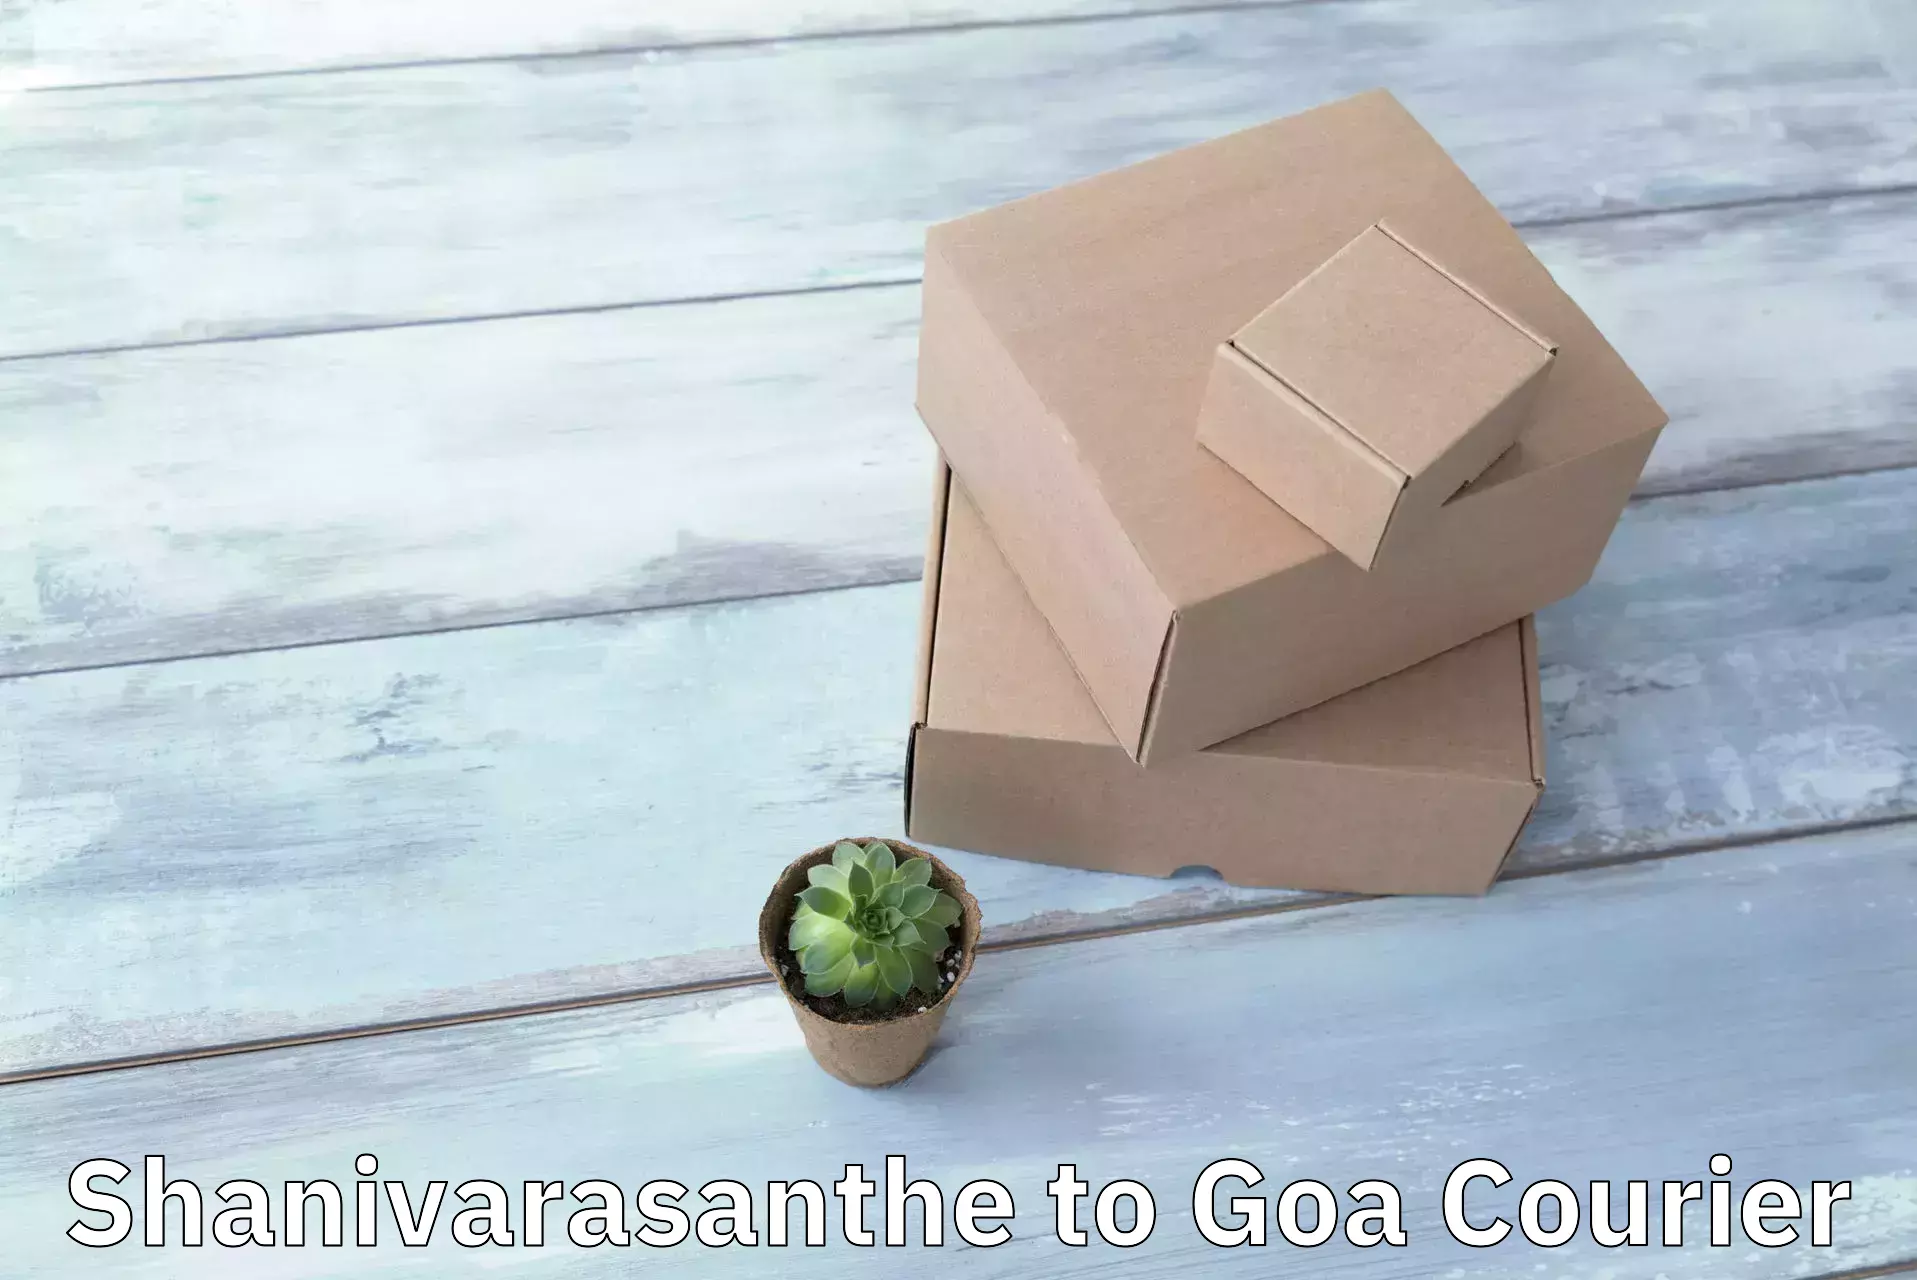 User-friendly courier app Shanivarasanthe to Goa